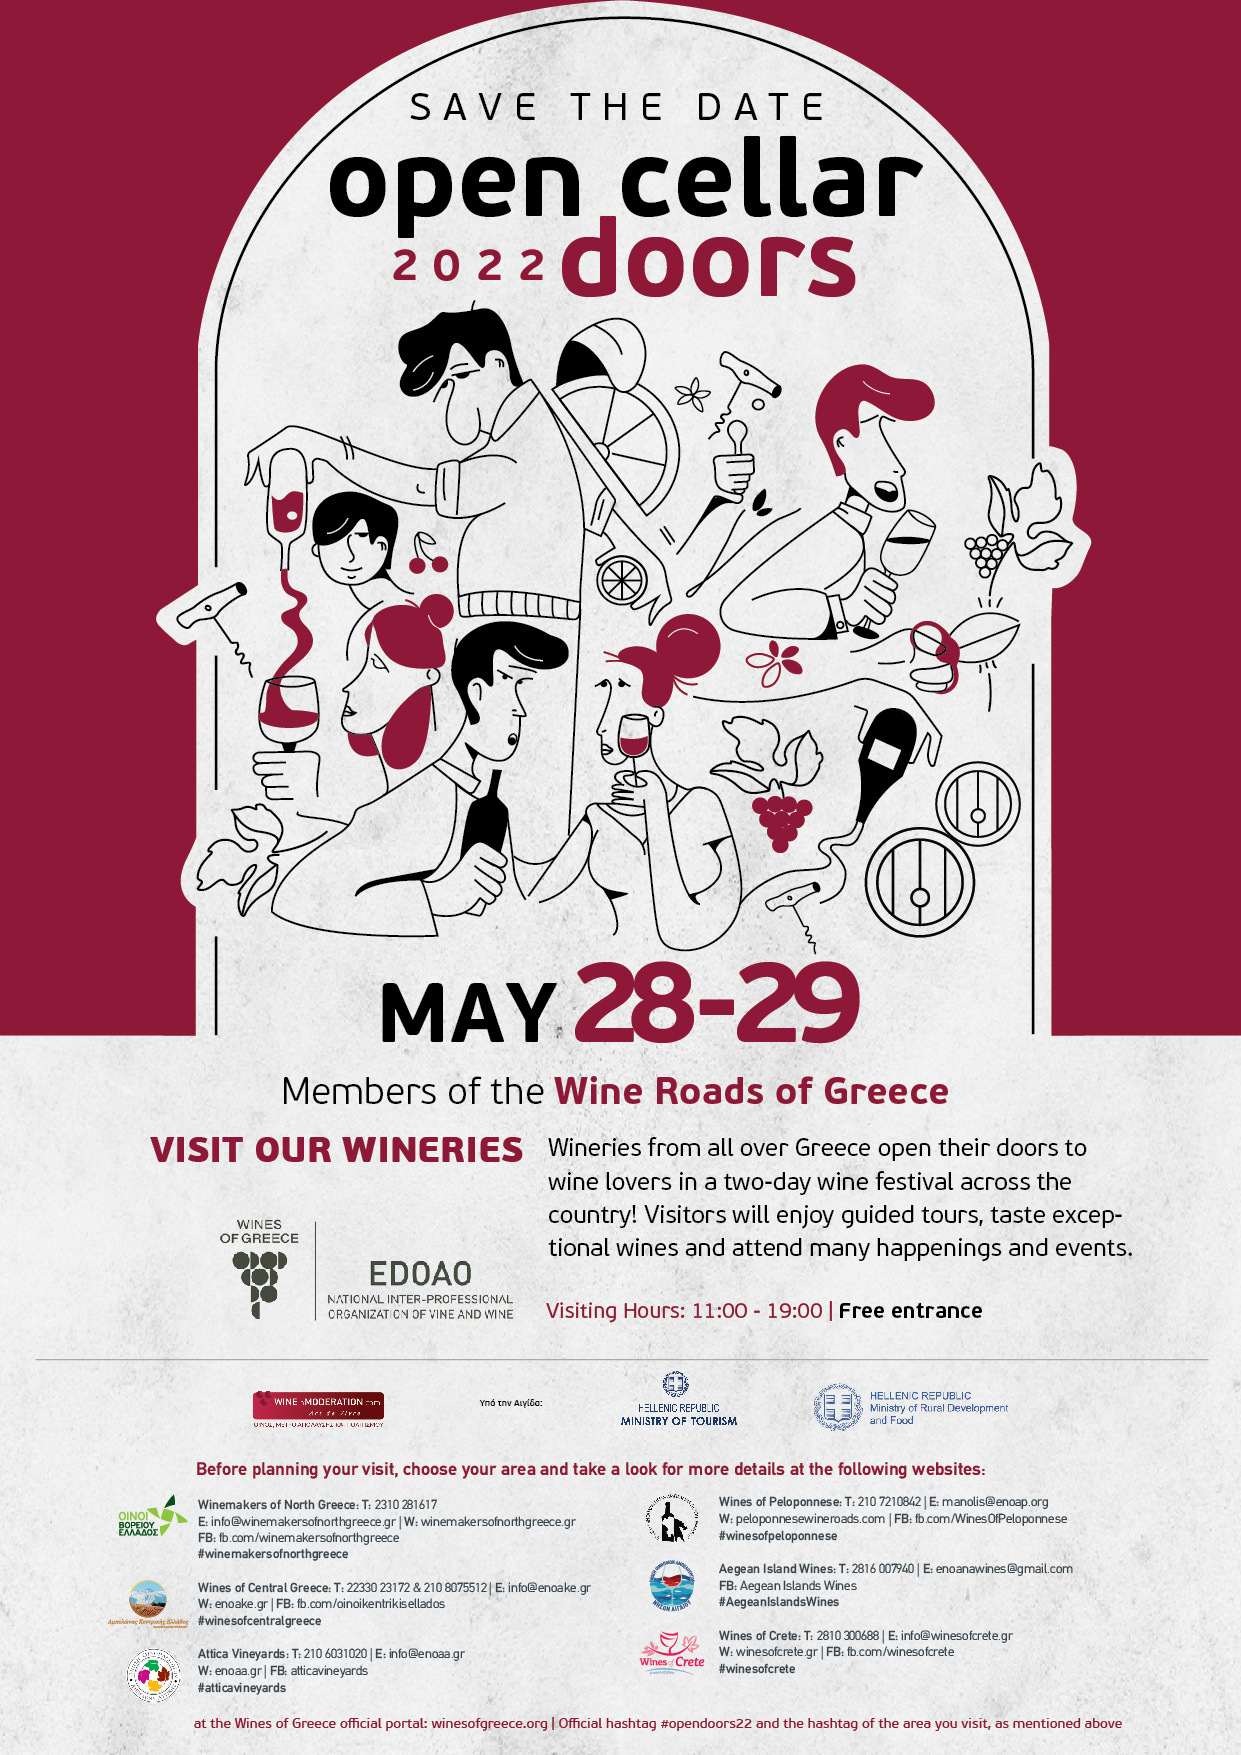 “Open Cellar Doors” at Greek wineries! Saturday May 28th and Sunday May 28th 2022